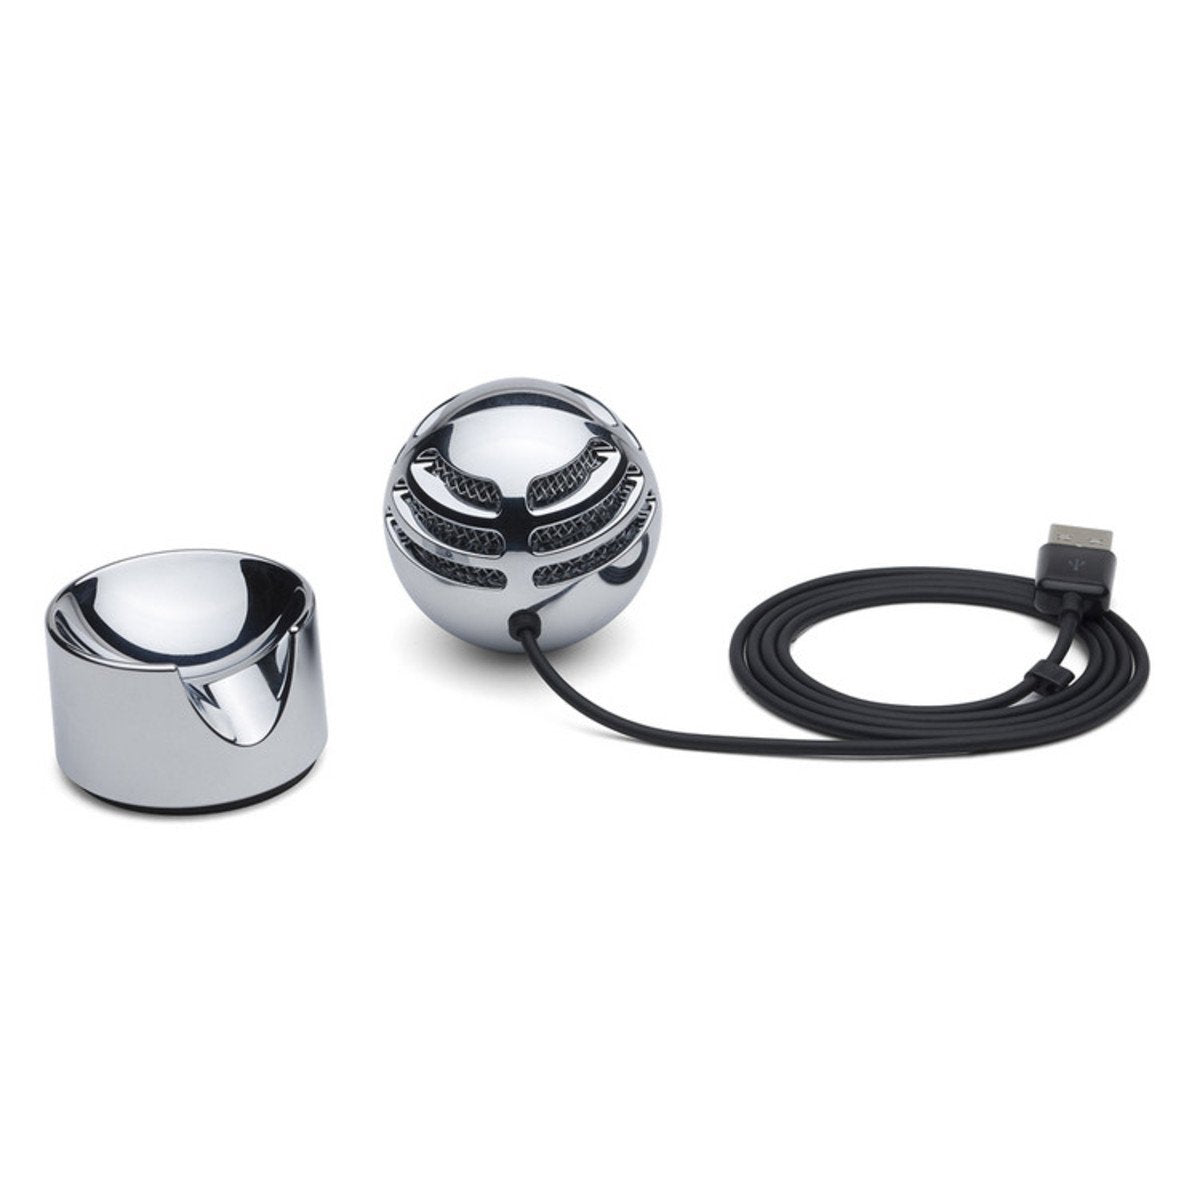 Samson Meteorite Portable USB Condenser Microphone - DY Pro Audio